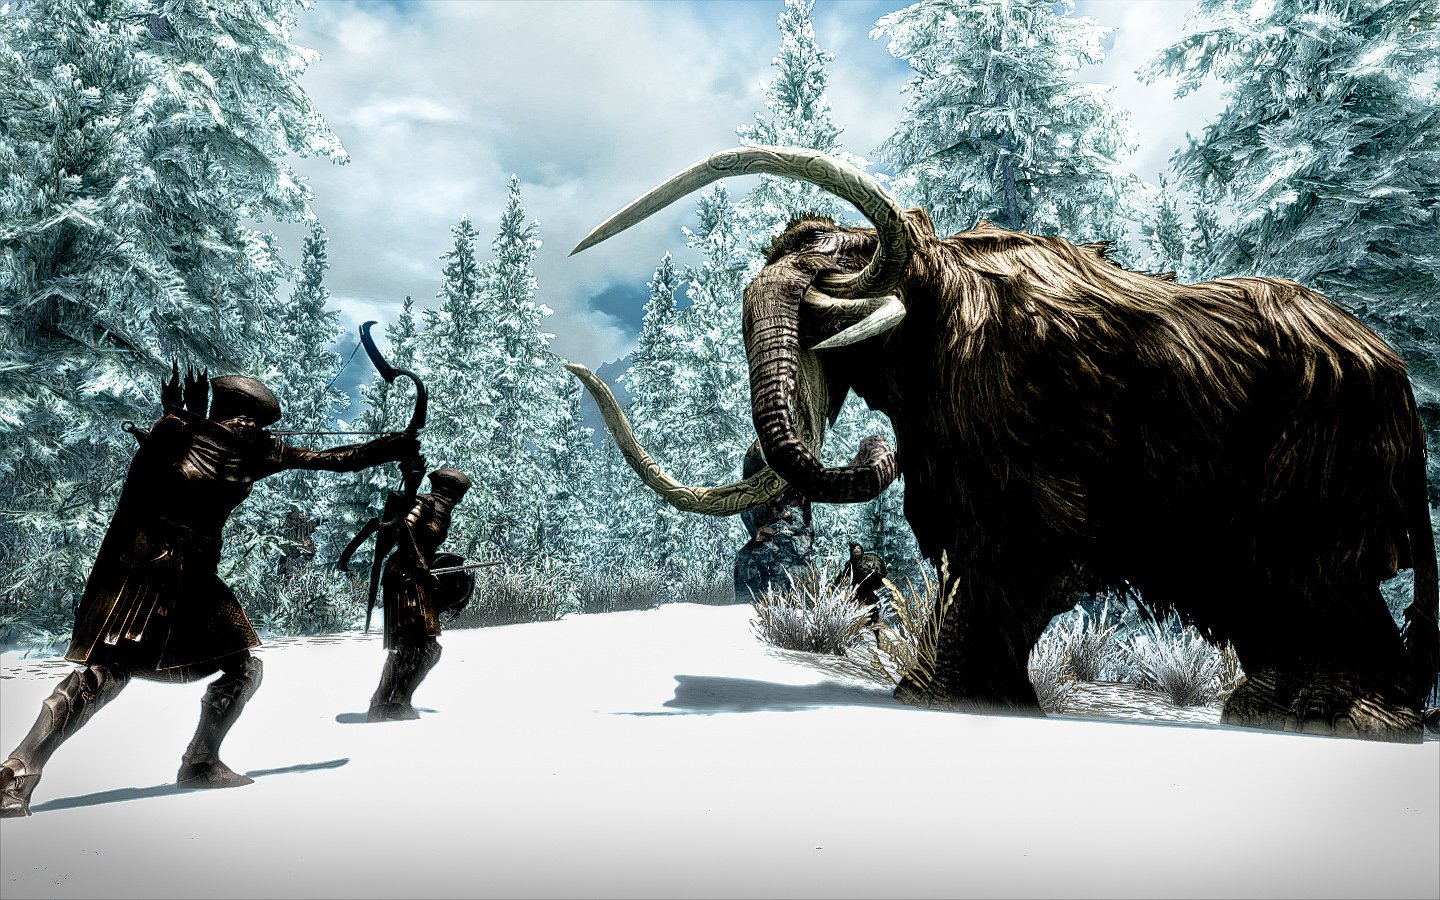 Mammoth hunters cetosis